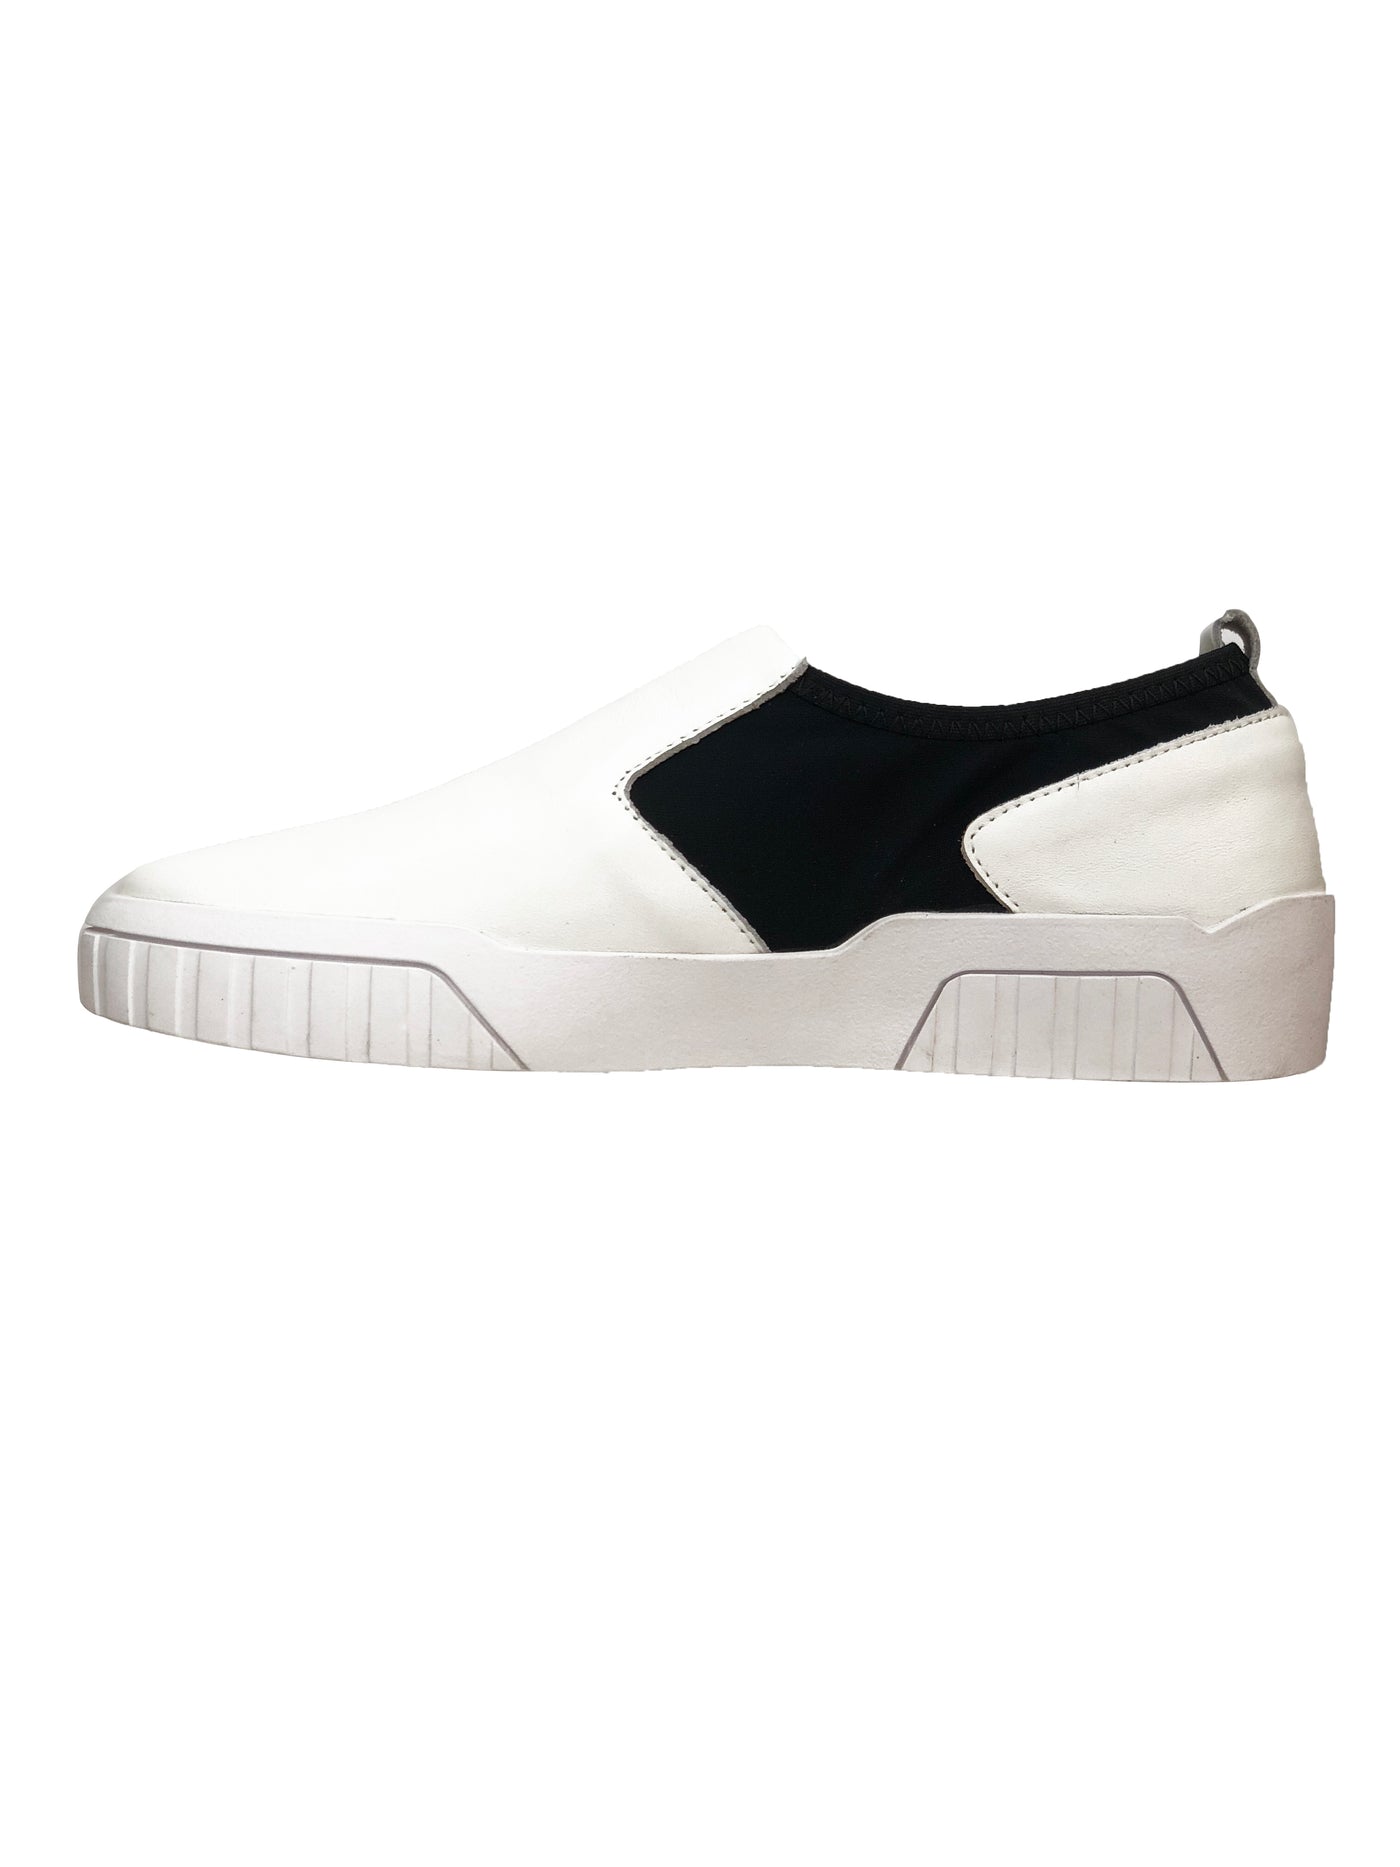 GELATO ROLICK WHITE/BLACK - Collective Shoes 